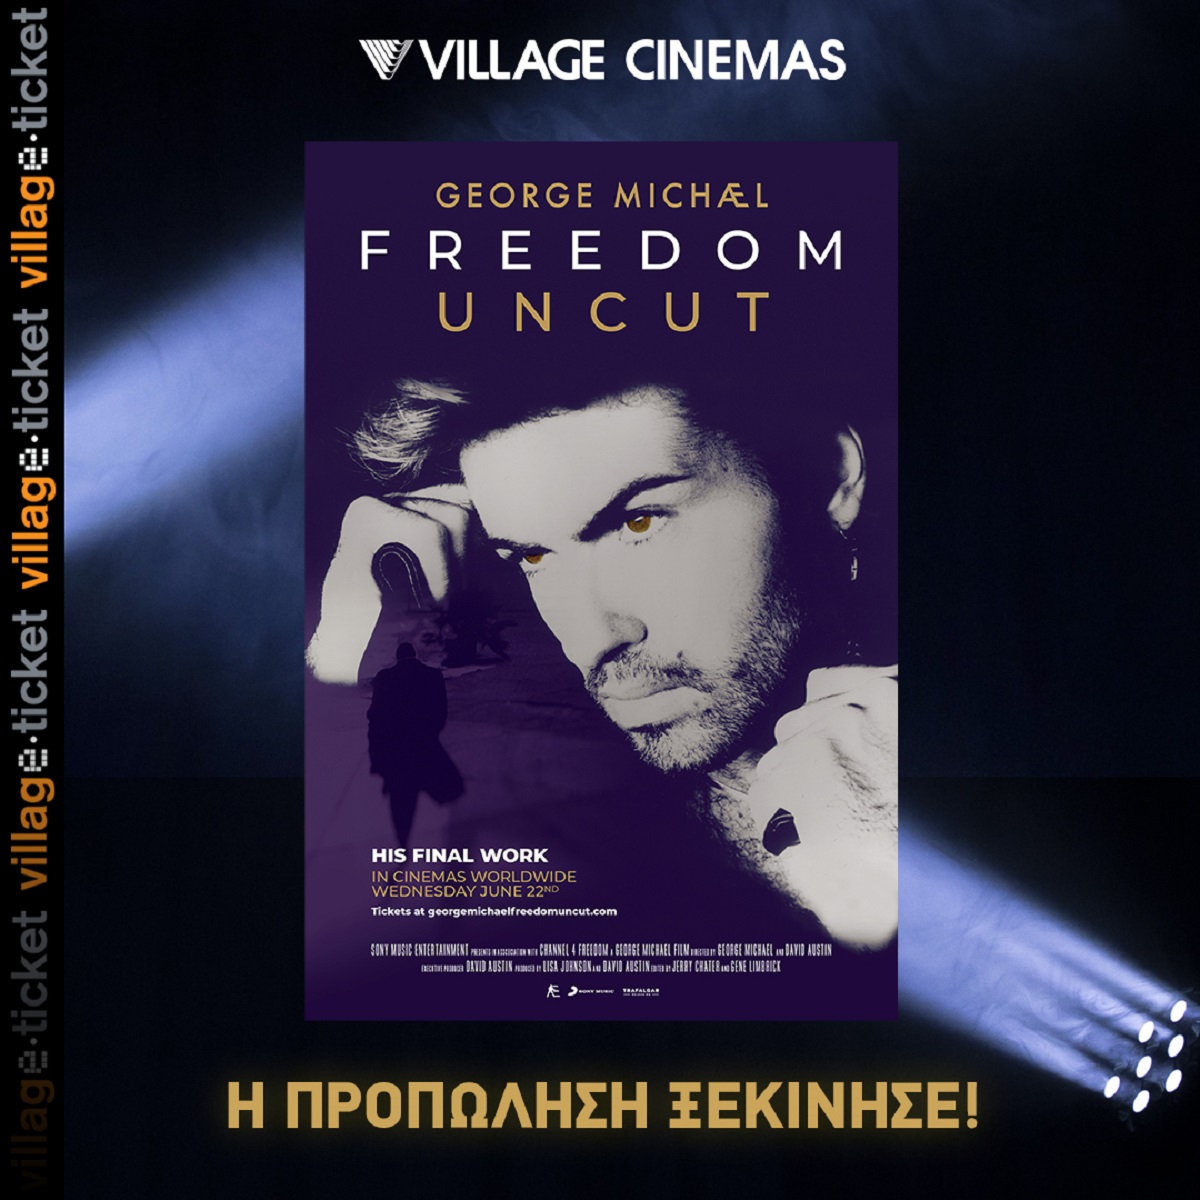 “George Michael Freedom Uncut”: Έρχεται το μουσικό ντοκιμαντέρ για τον George Michael! (VIDEO)